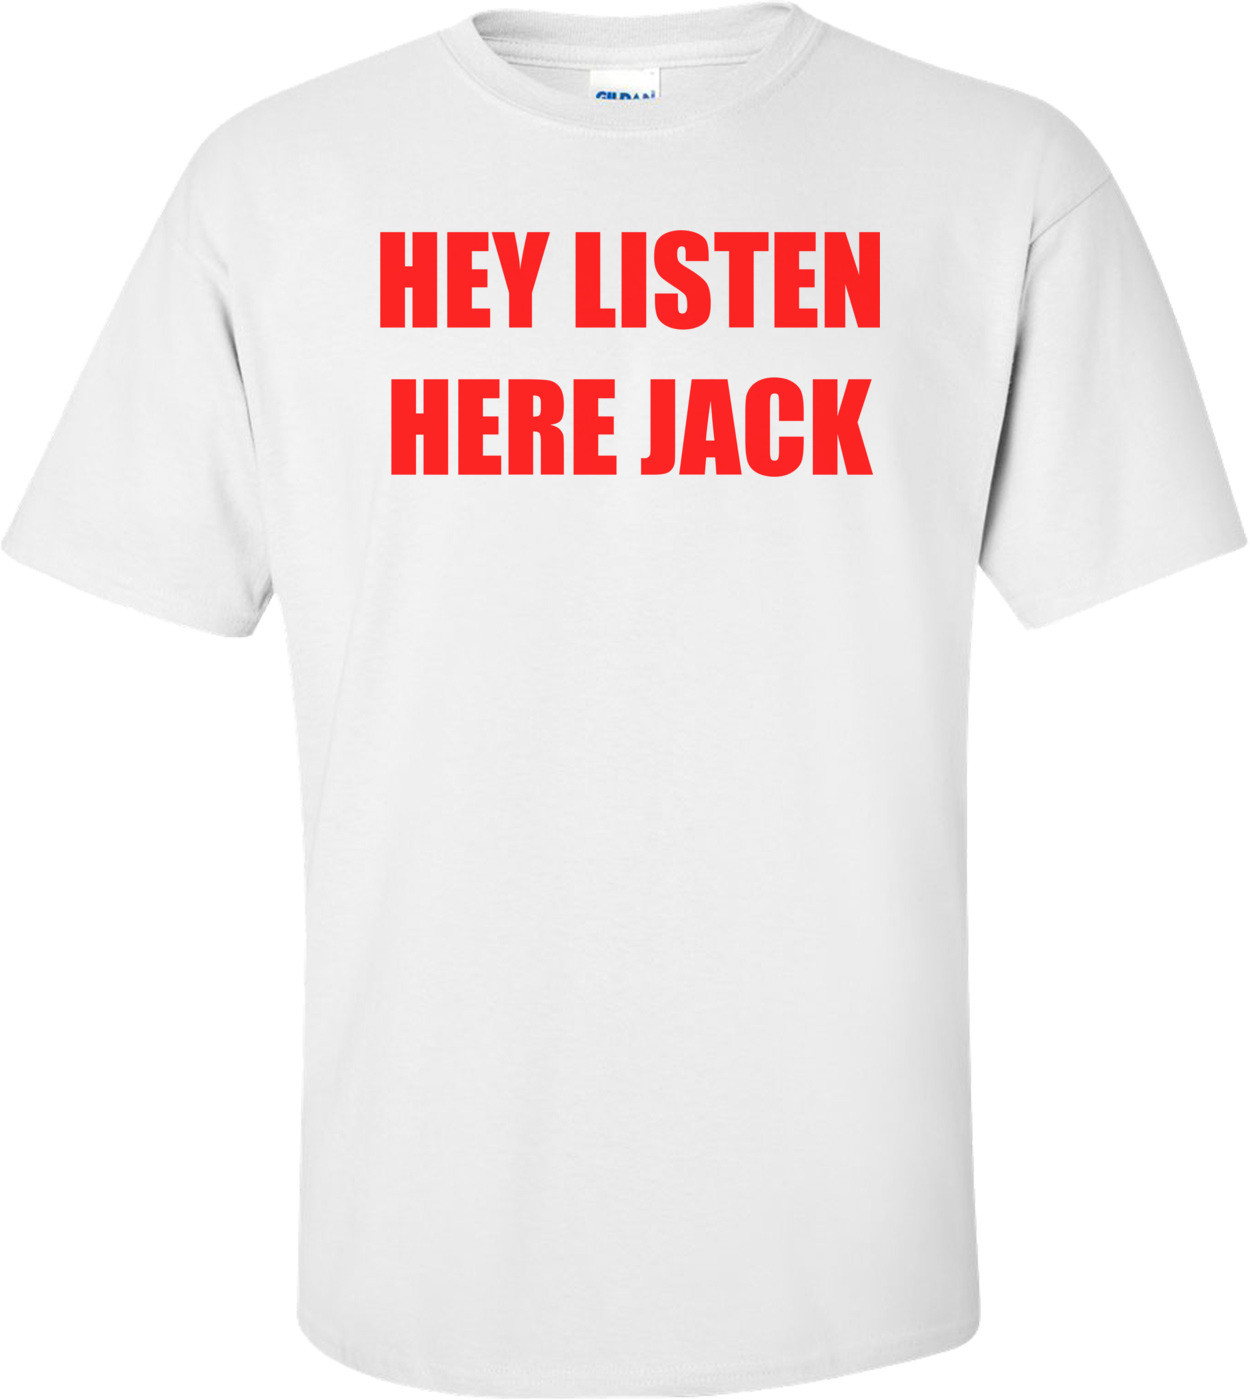 HEY LISTEN HERE JACK Shirt